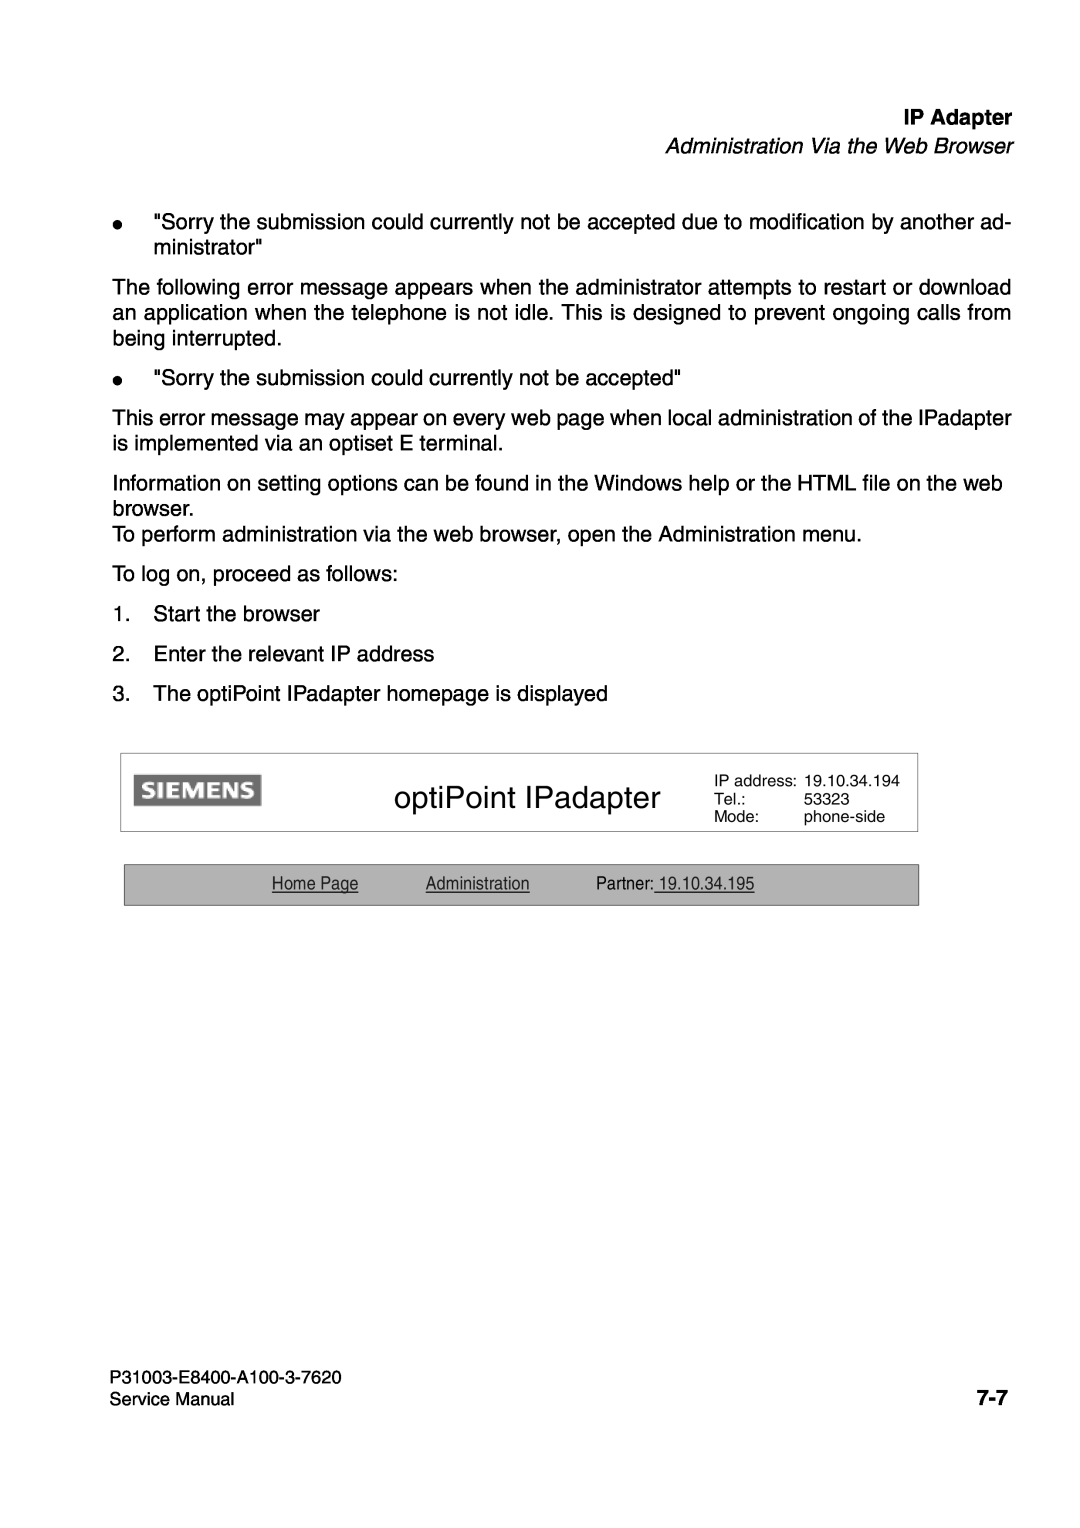 Siemens 500 service manual optiPoint IPadapter Tel, IP Adapter 